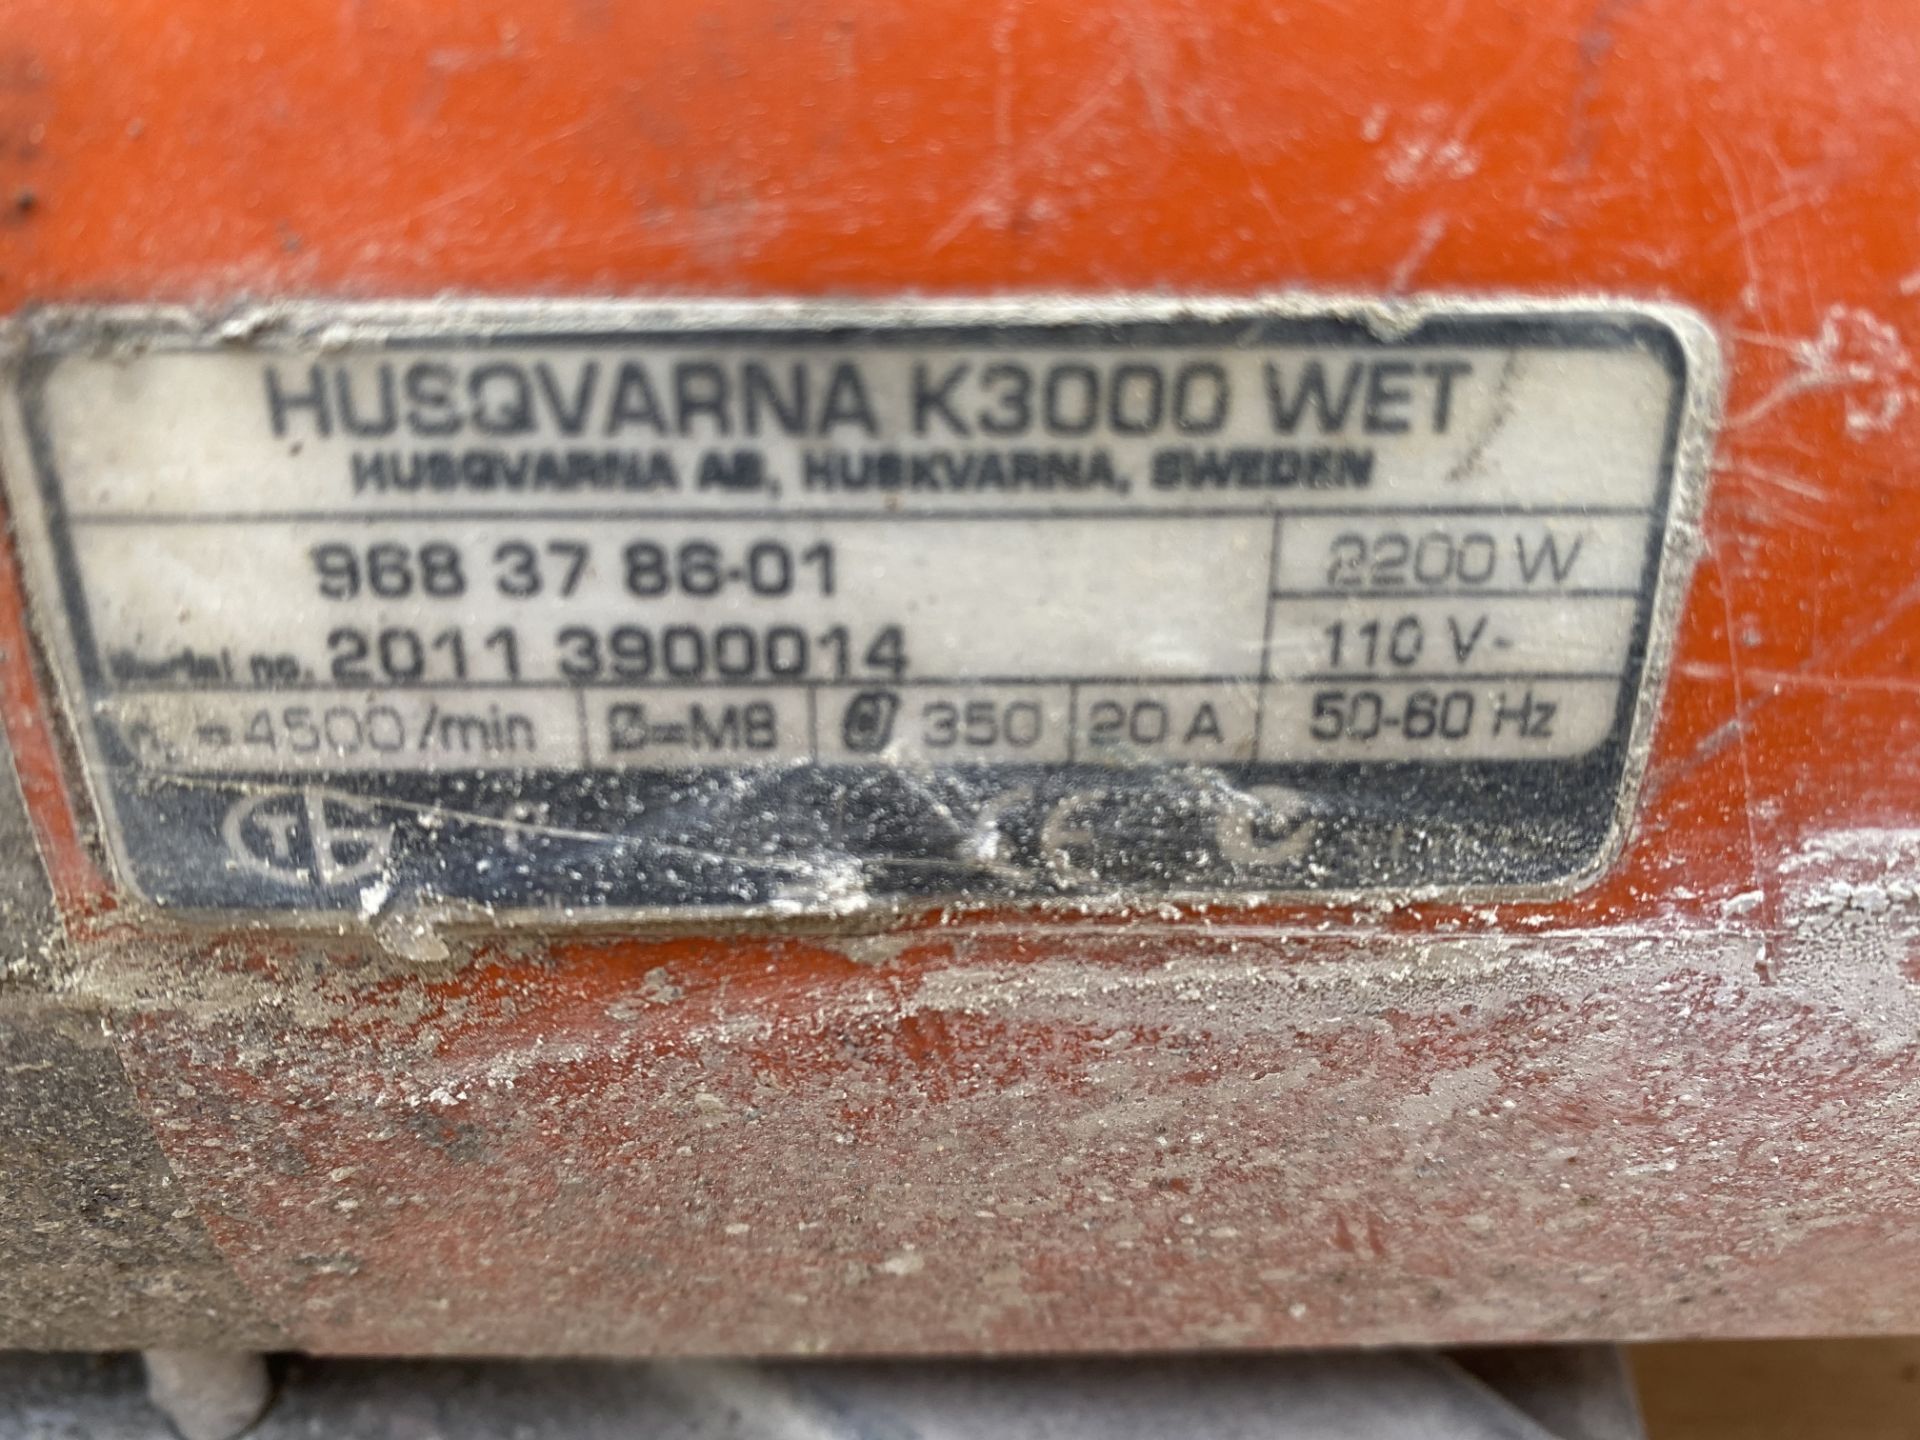 Husqvarna K3000 Wet wet and dry diamond cutter - Image 2 of 2